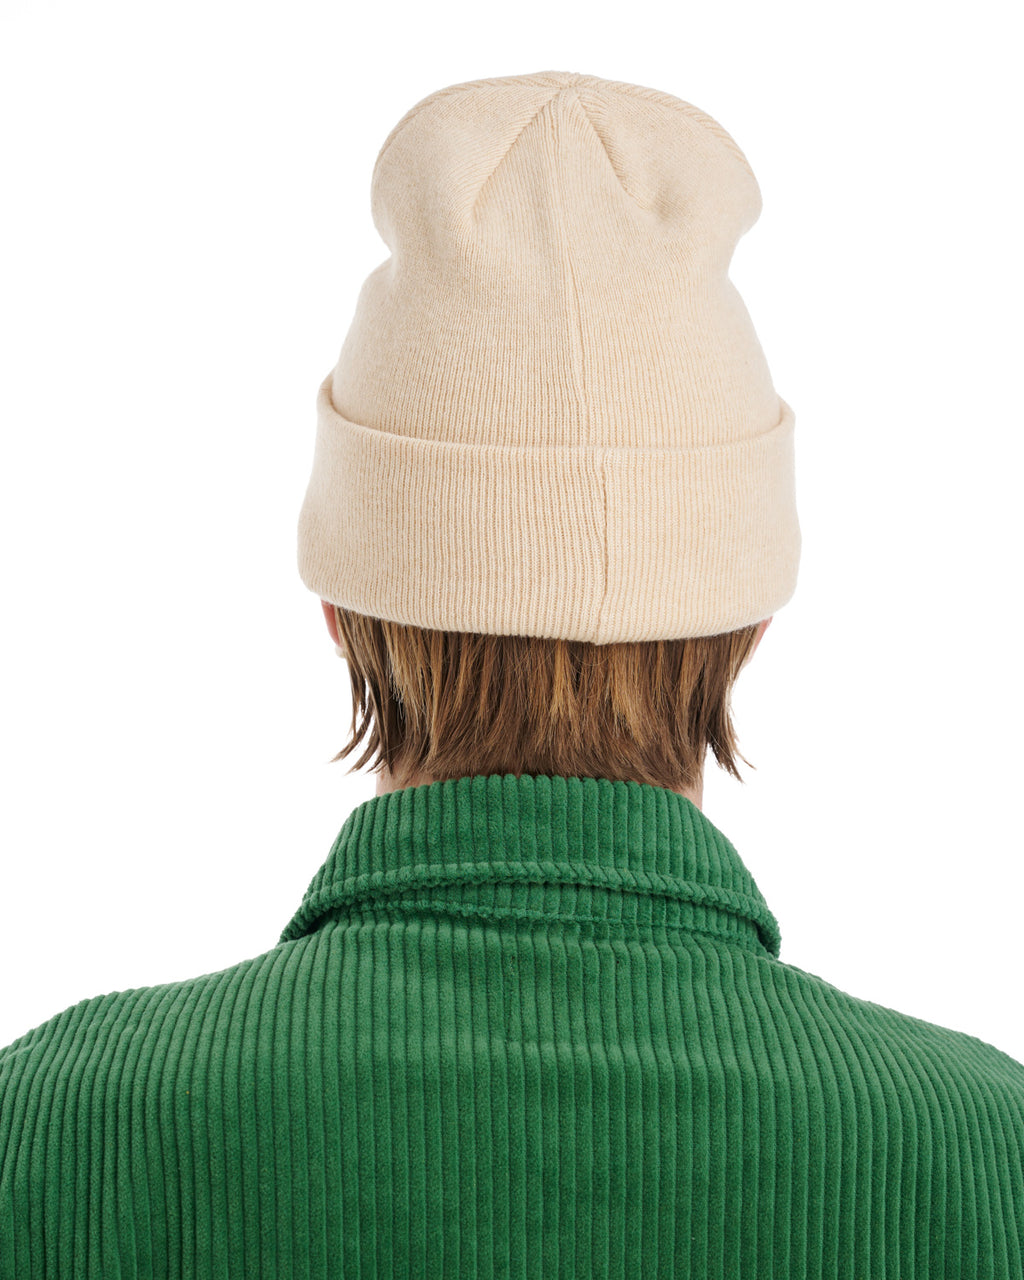 Light Beige Logo Wool Beanie - Hats & Beanies for Men